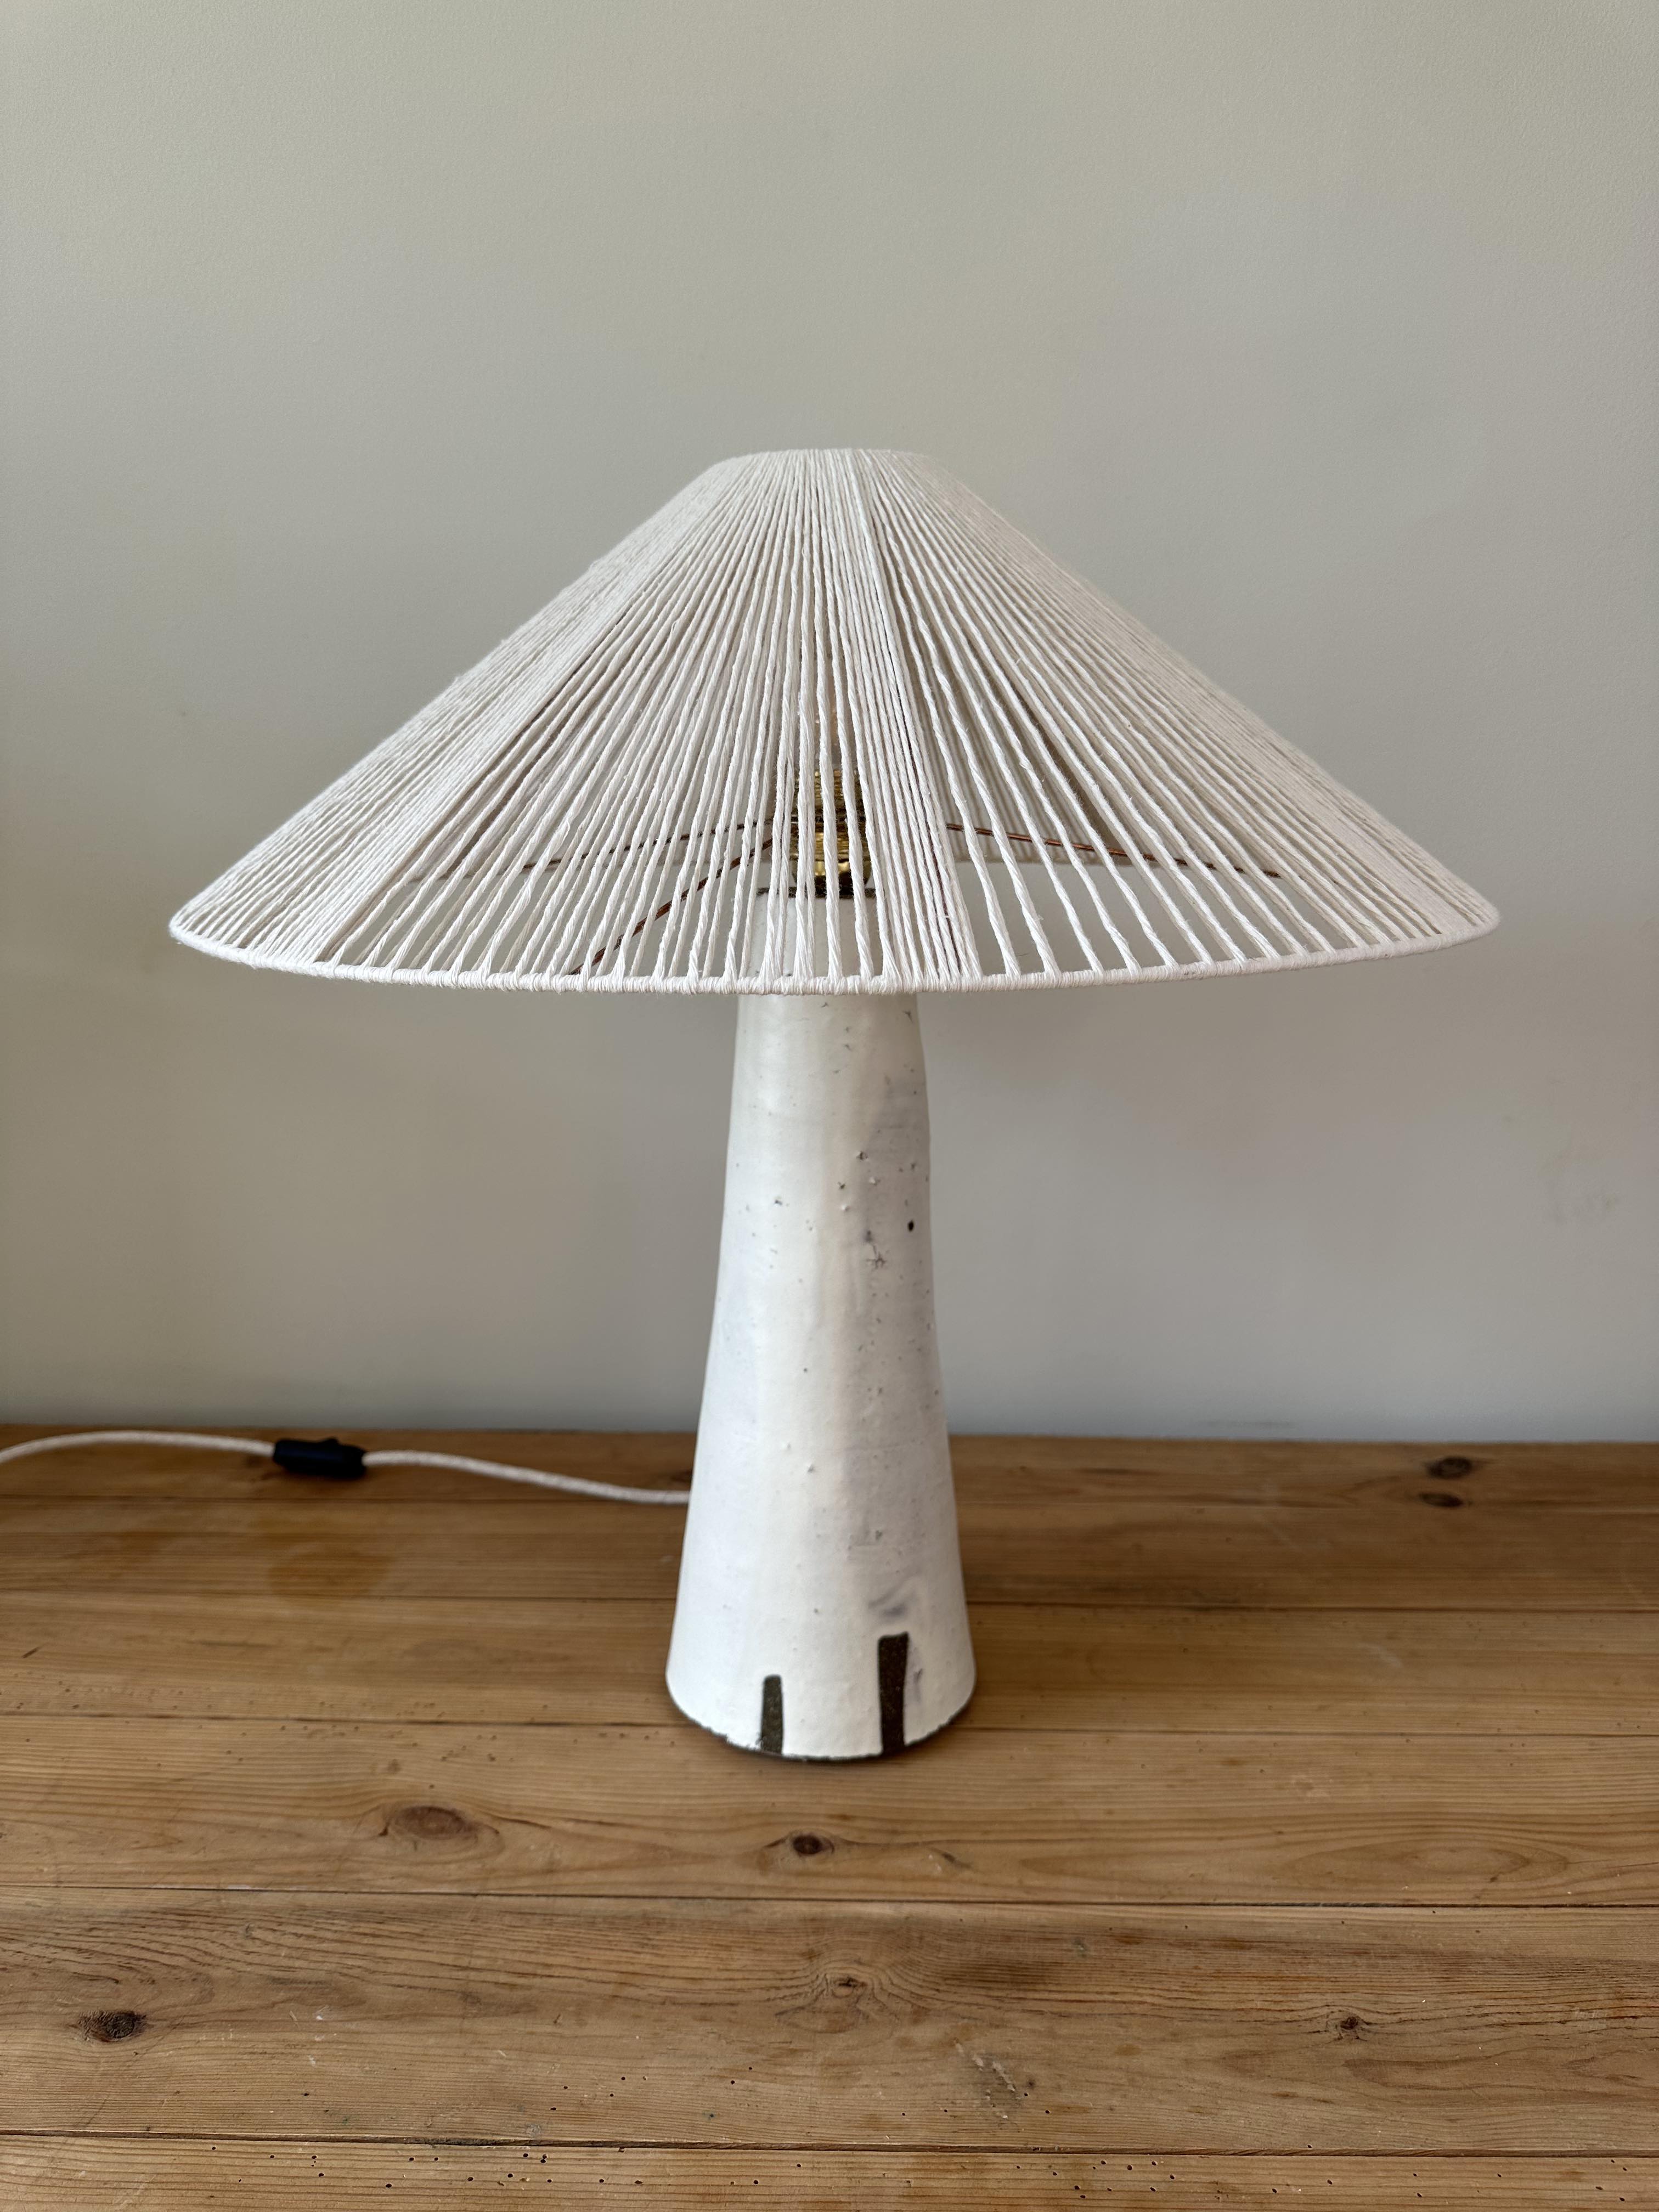 Dayan table lamp